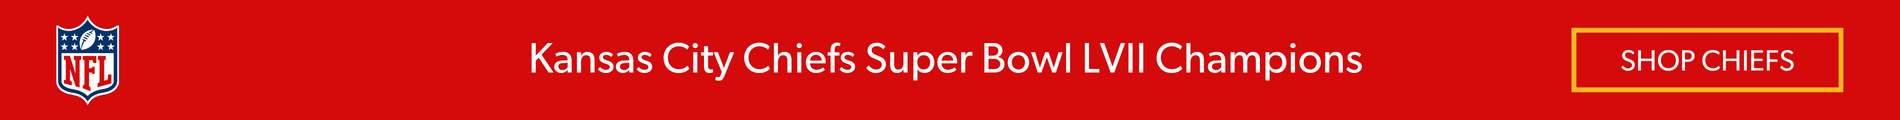 Kansas City Chiefs Super Bowl LVII Champions - Shop Chiefs